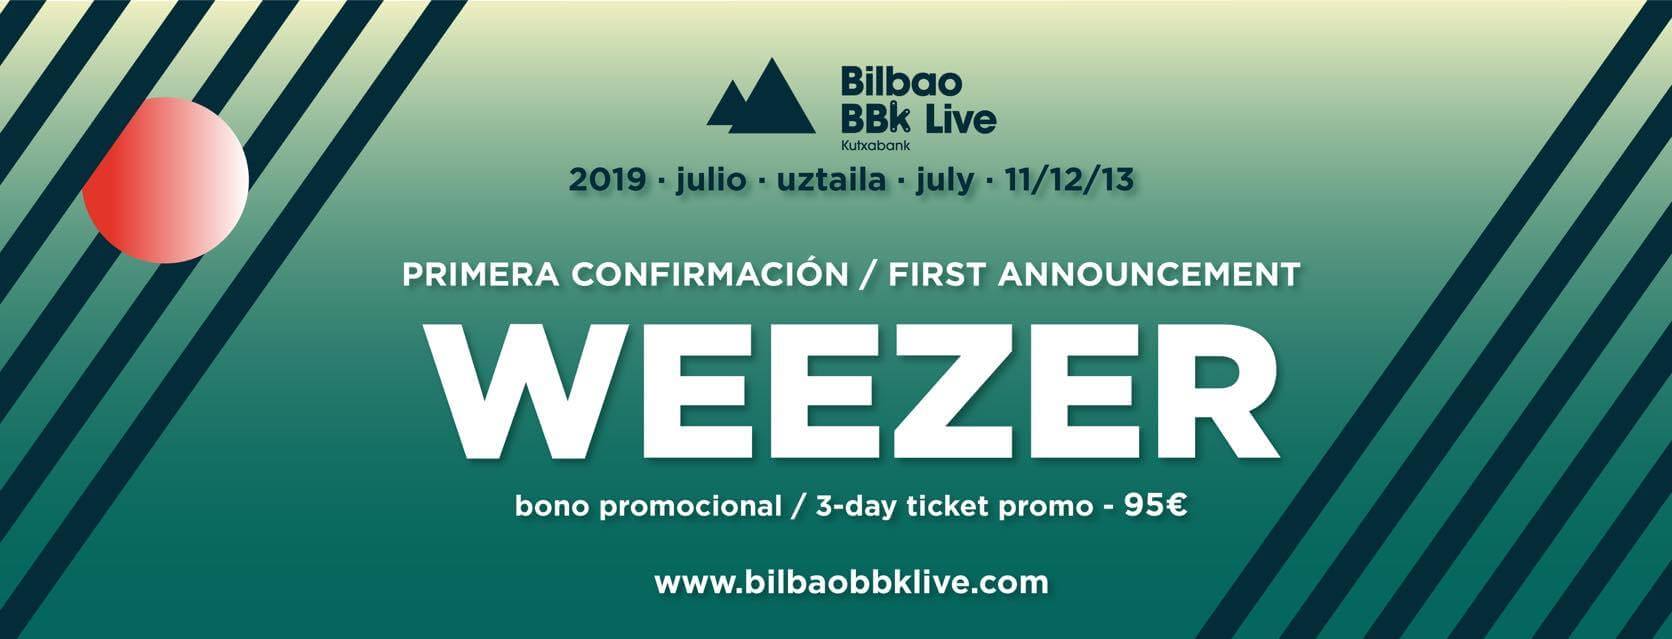 Bilbao BBK LIVE 2019